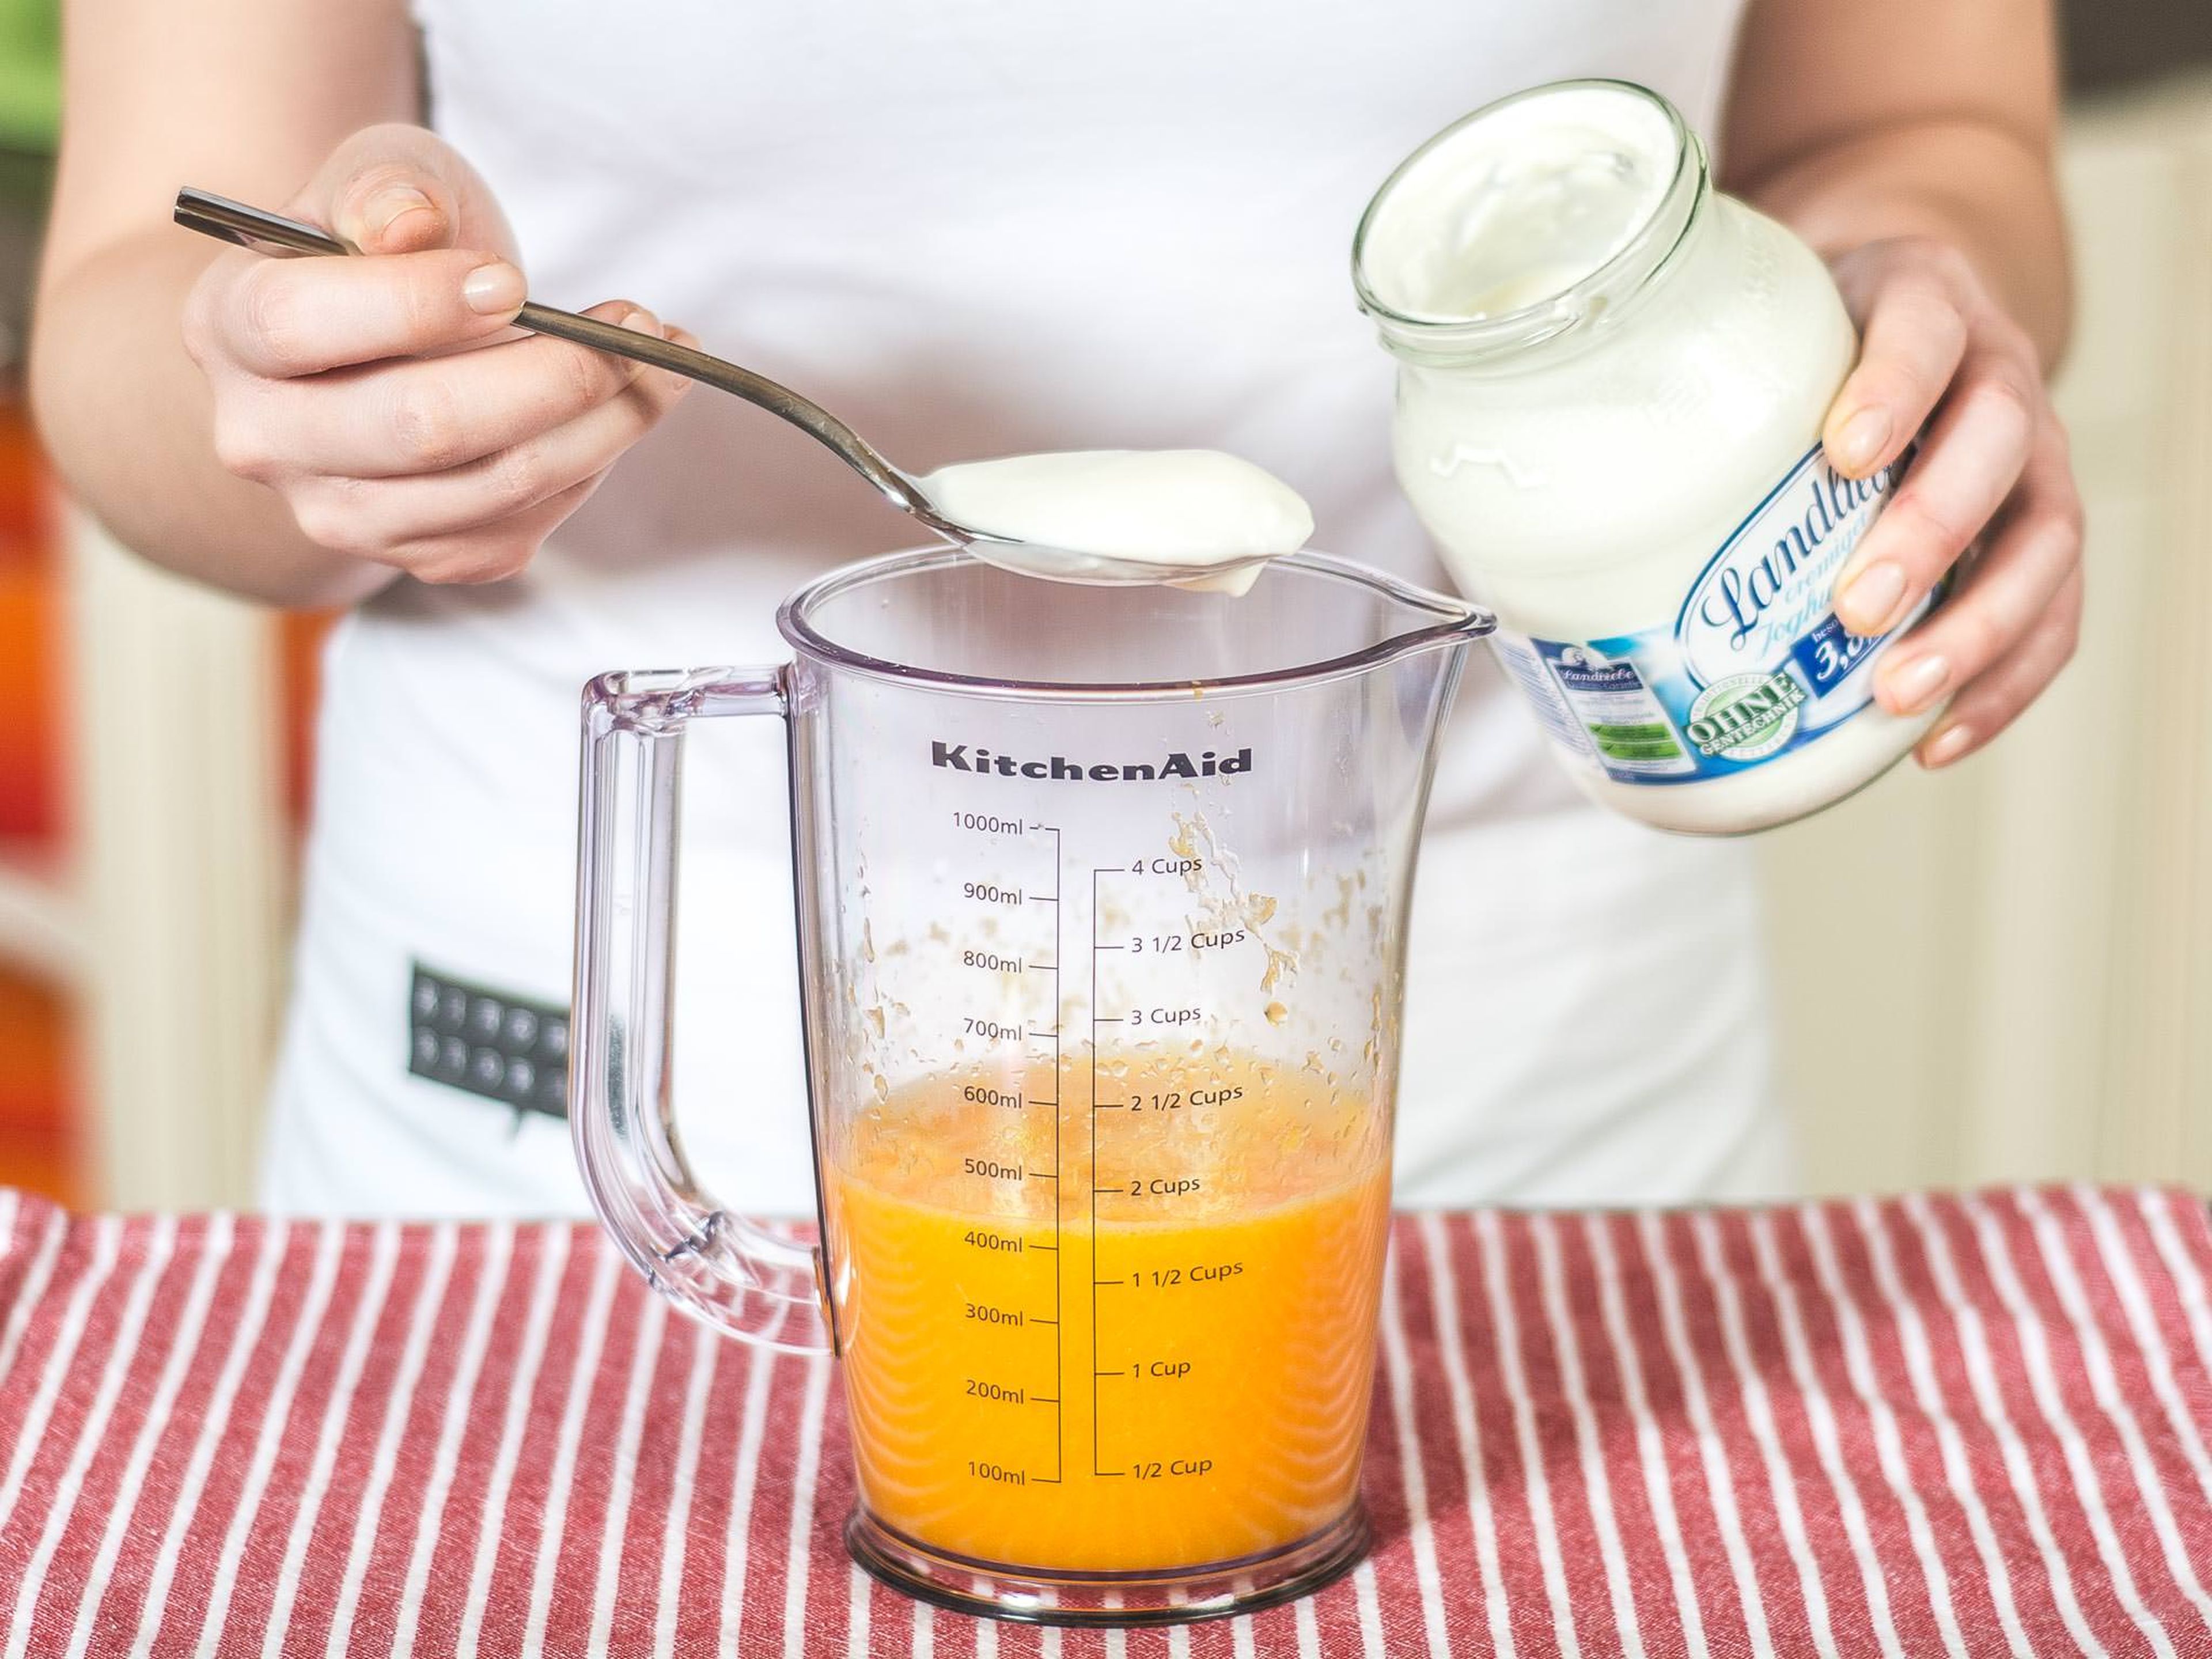 Stir the natural yogurt in evenly.